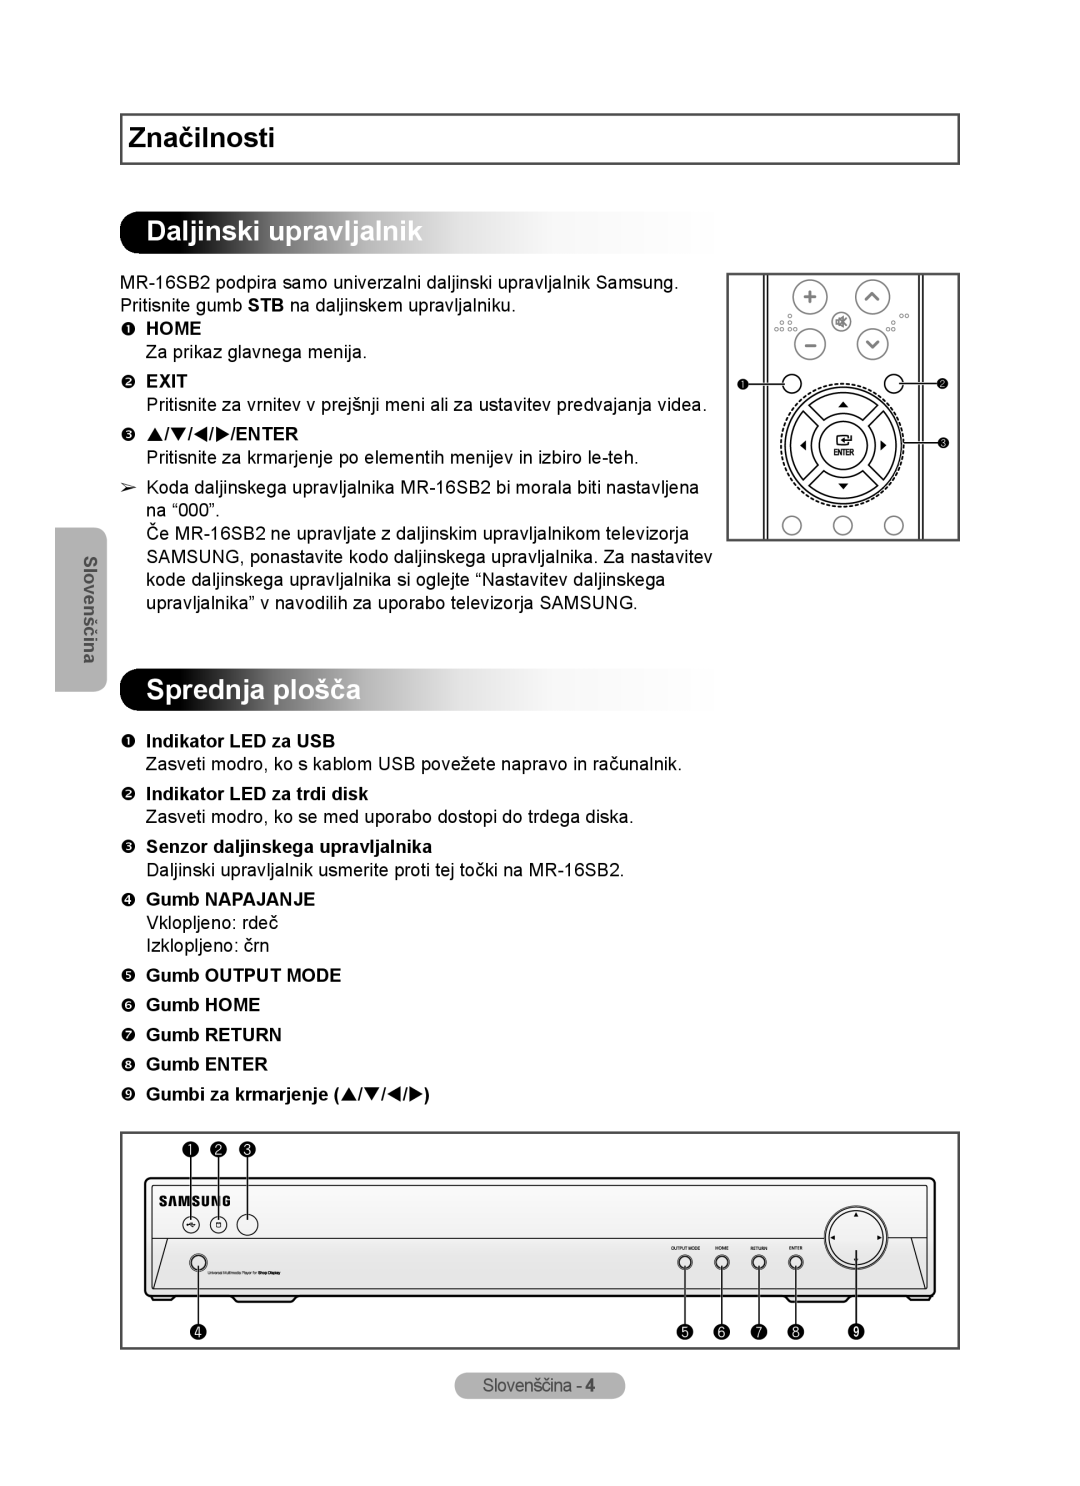 Samsung MR-16SB2 Daljinski upravljalnik, Sprednja plošča,  Indikator LED za USB,  Indikator LED za trdi disk,  Home 